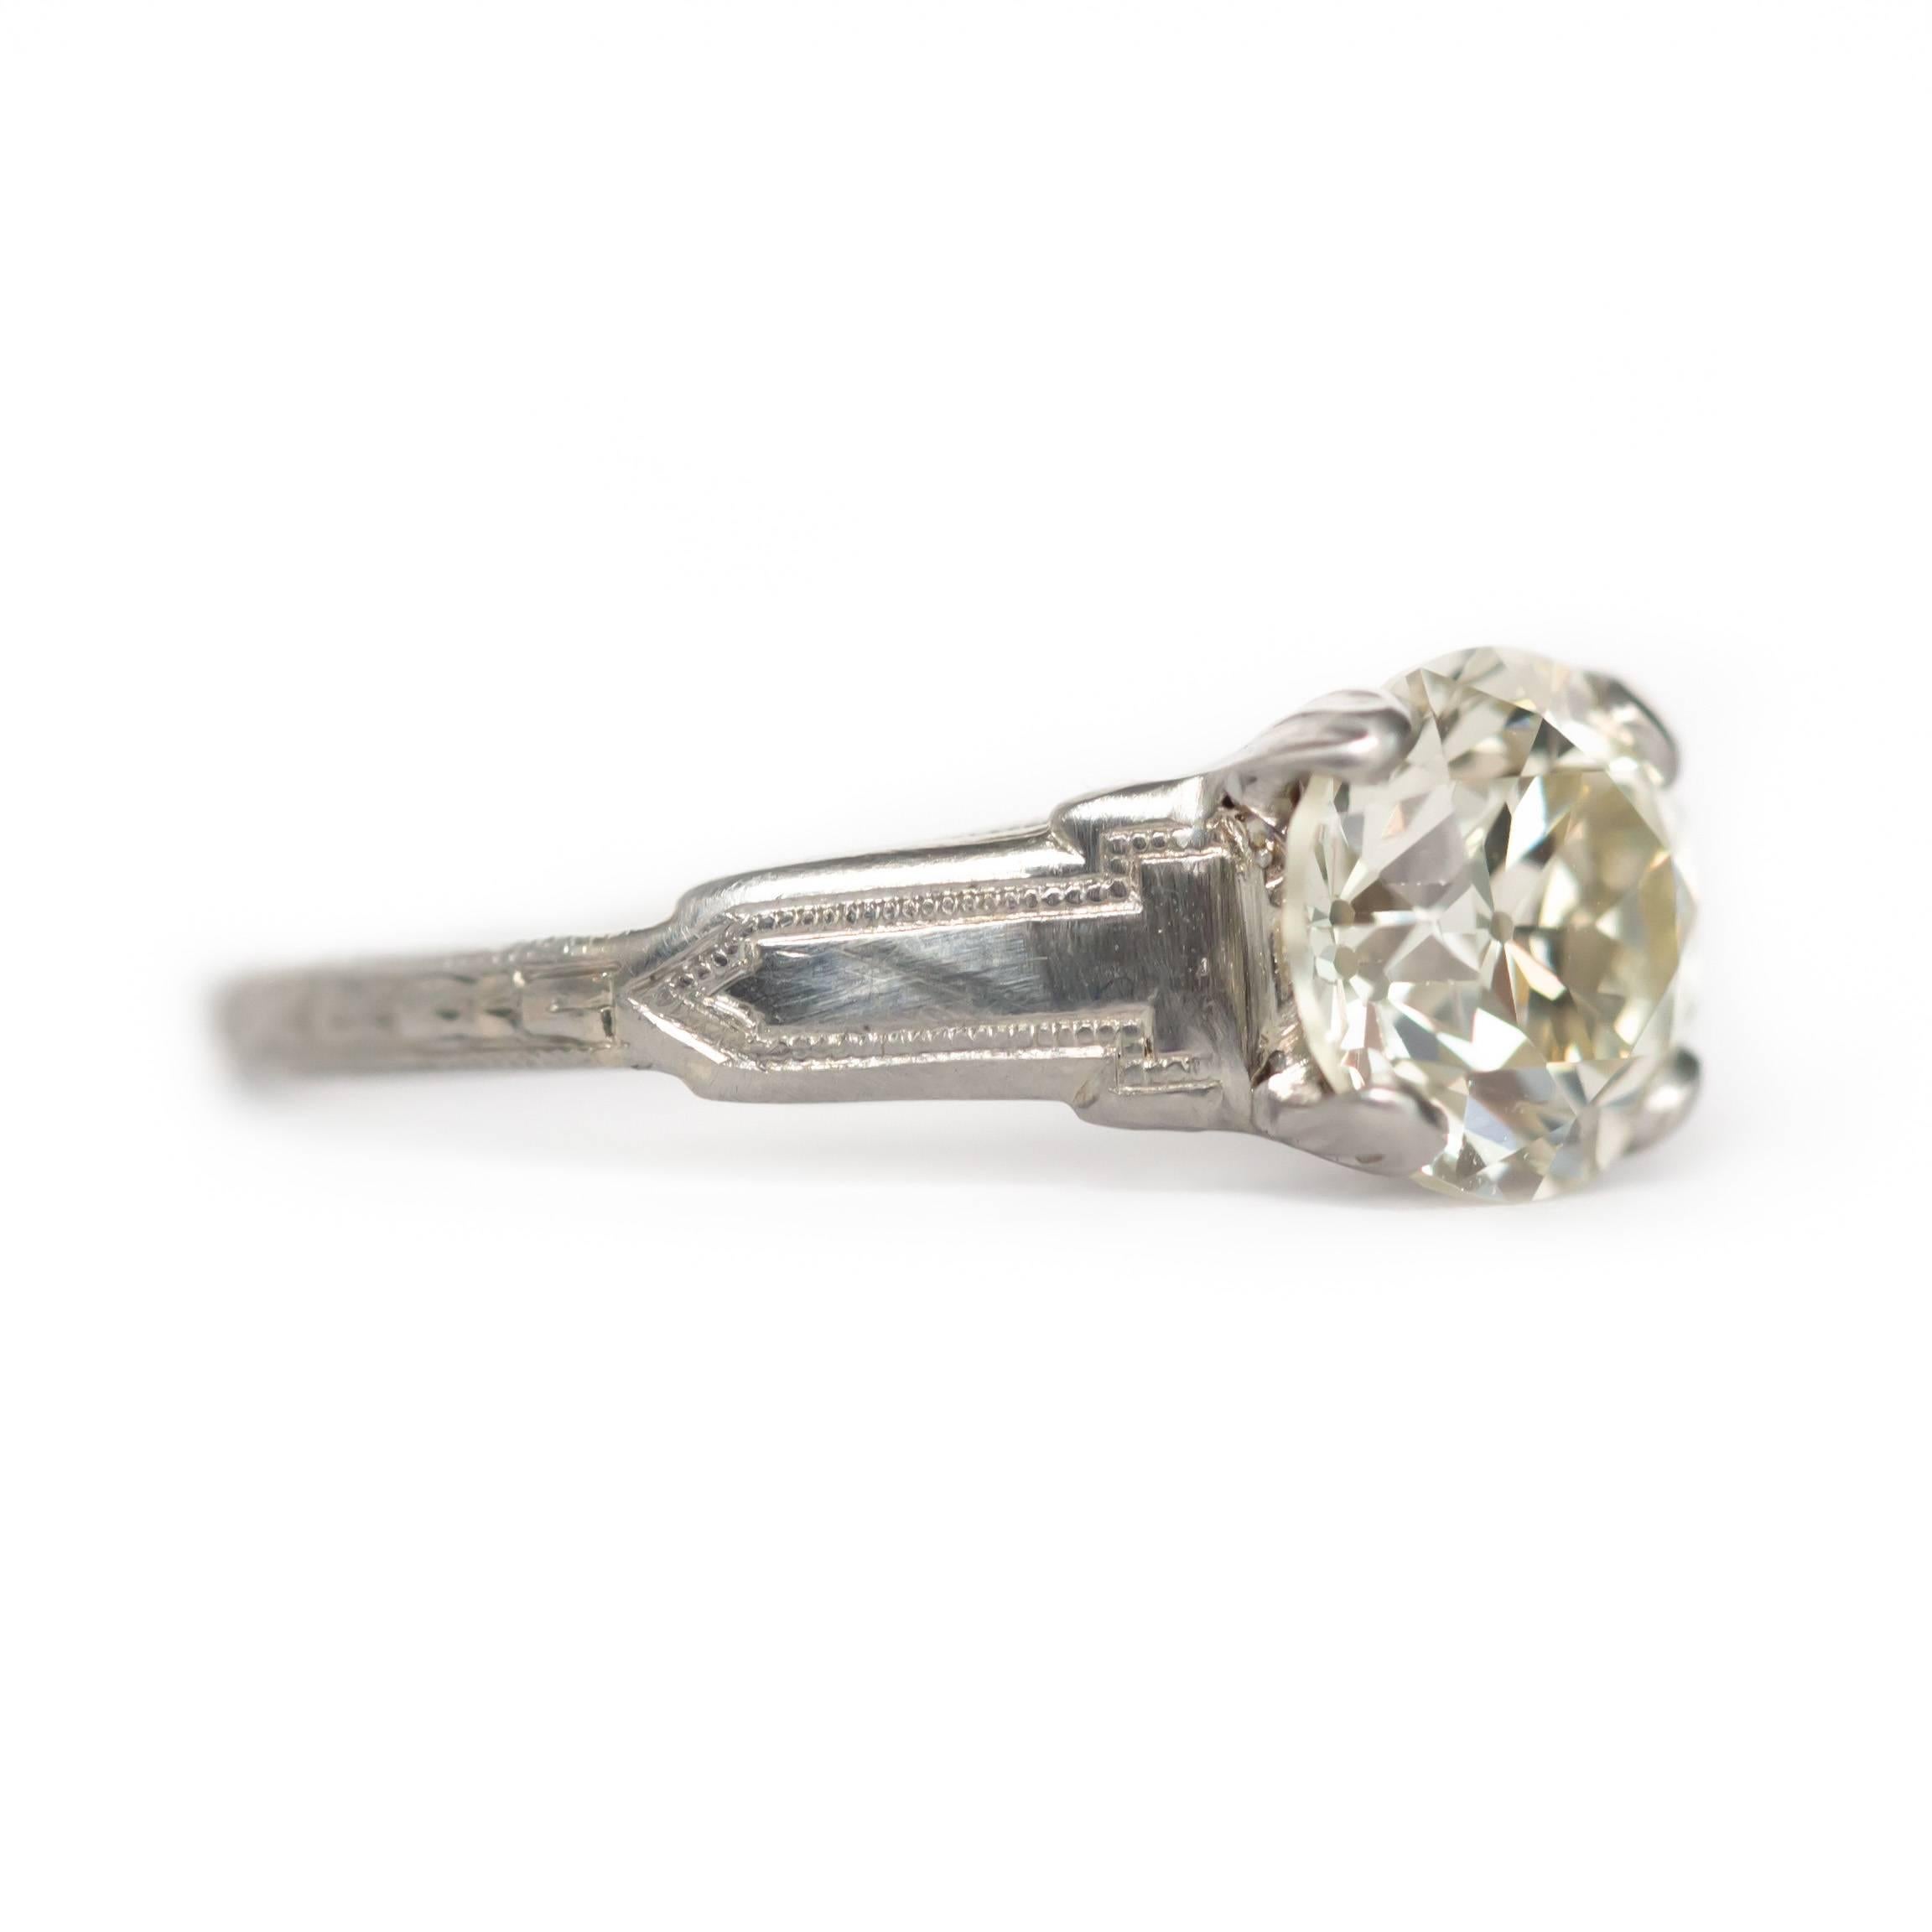 1.23 carat diamond ring